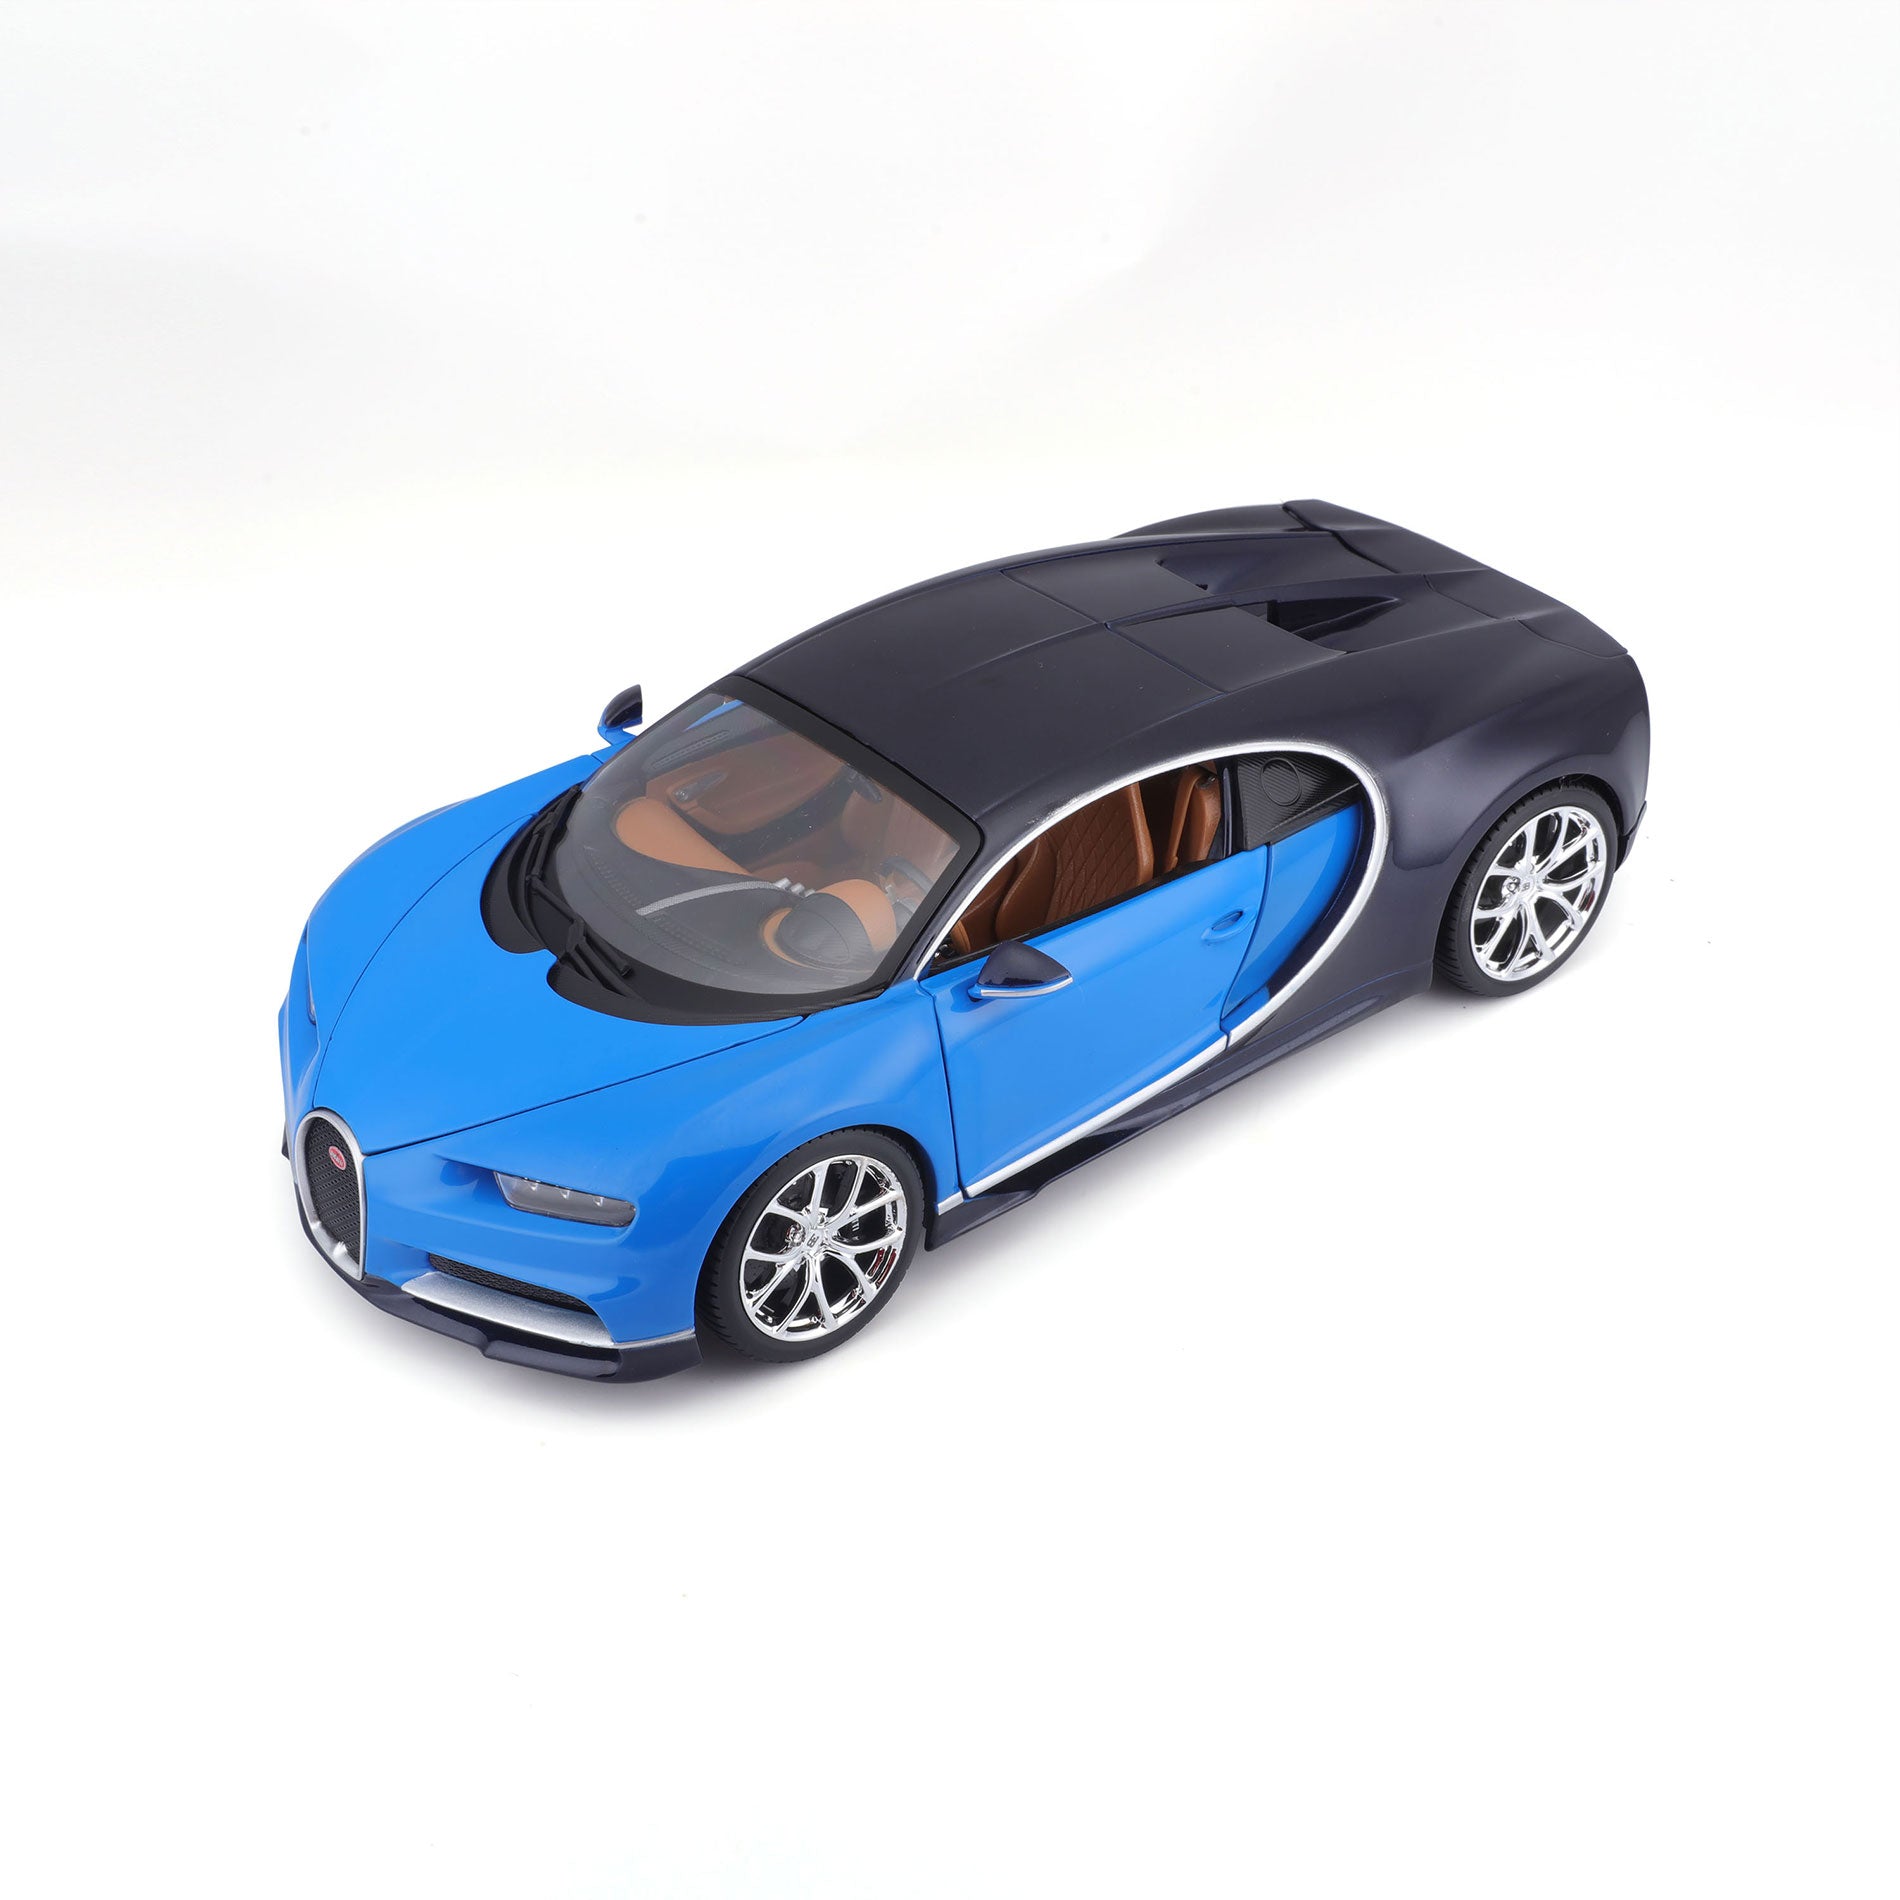 18-11040 BU - Bburago - 1:18 - Bugatti Chiron - Blu met. intenso/Azzurro